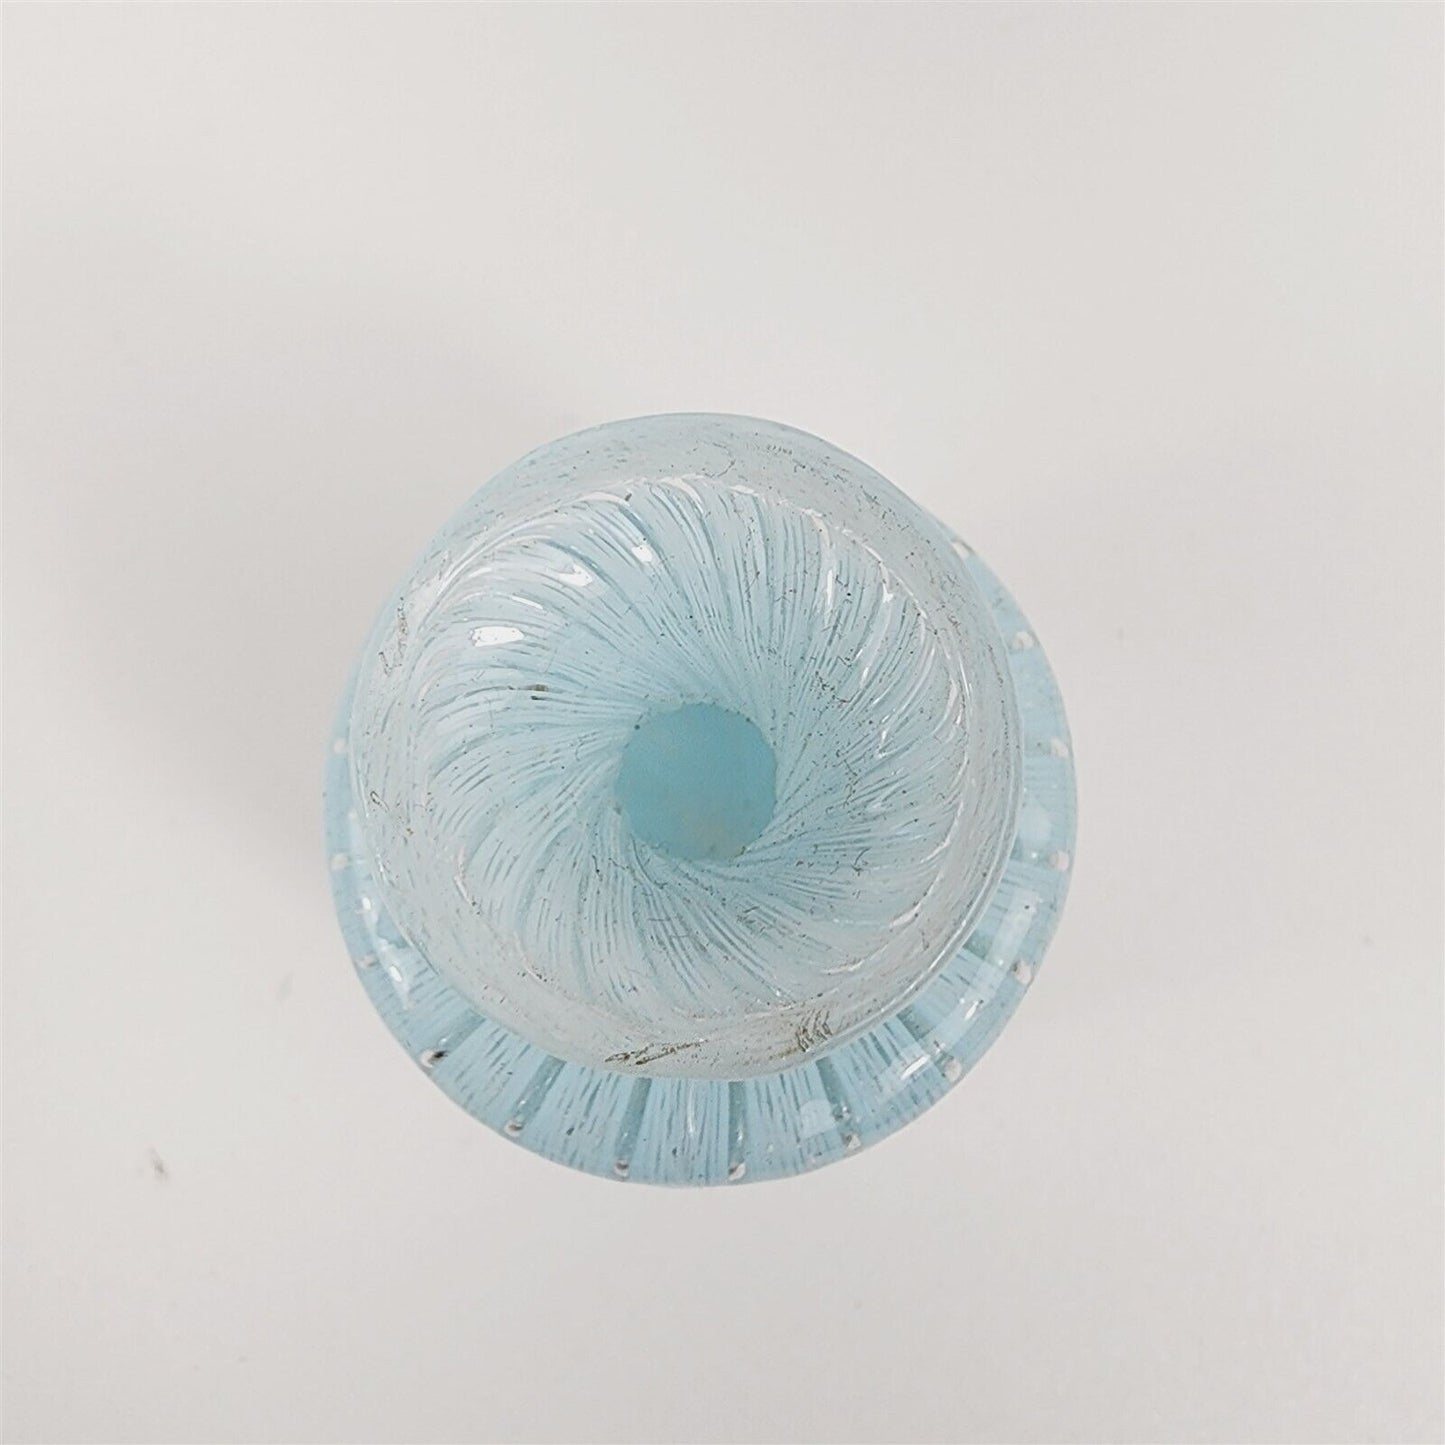 3 Vintage Latticino Art Glass Bottle Vase & Dish Handmade 1" - 5 1/2"